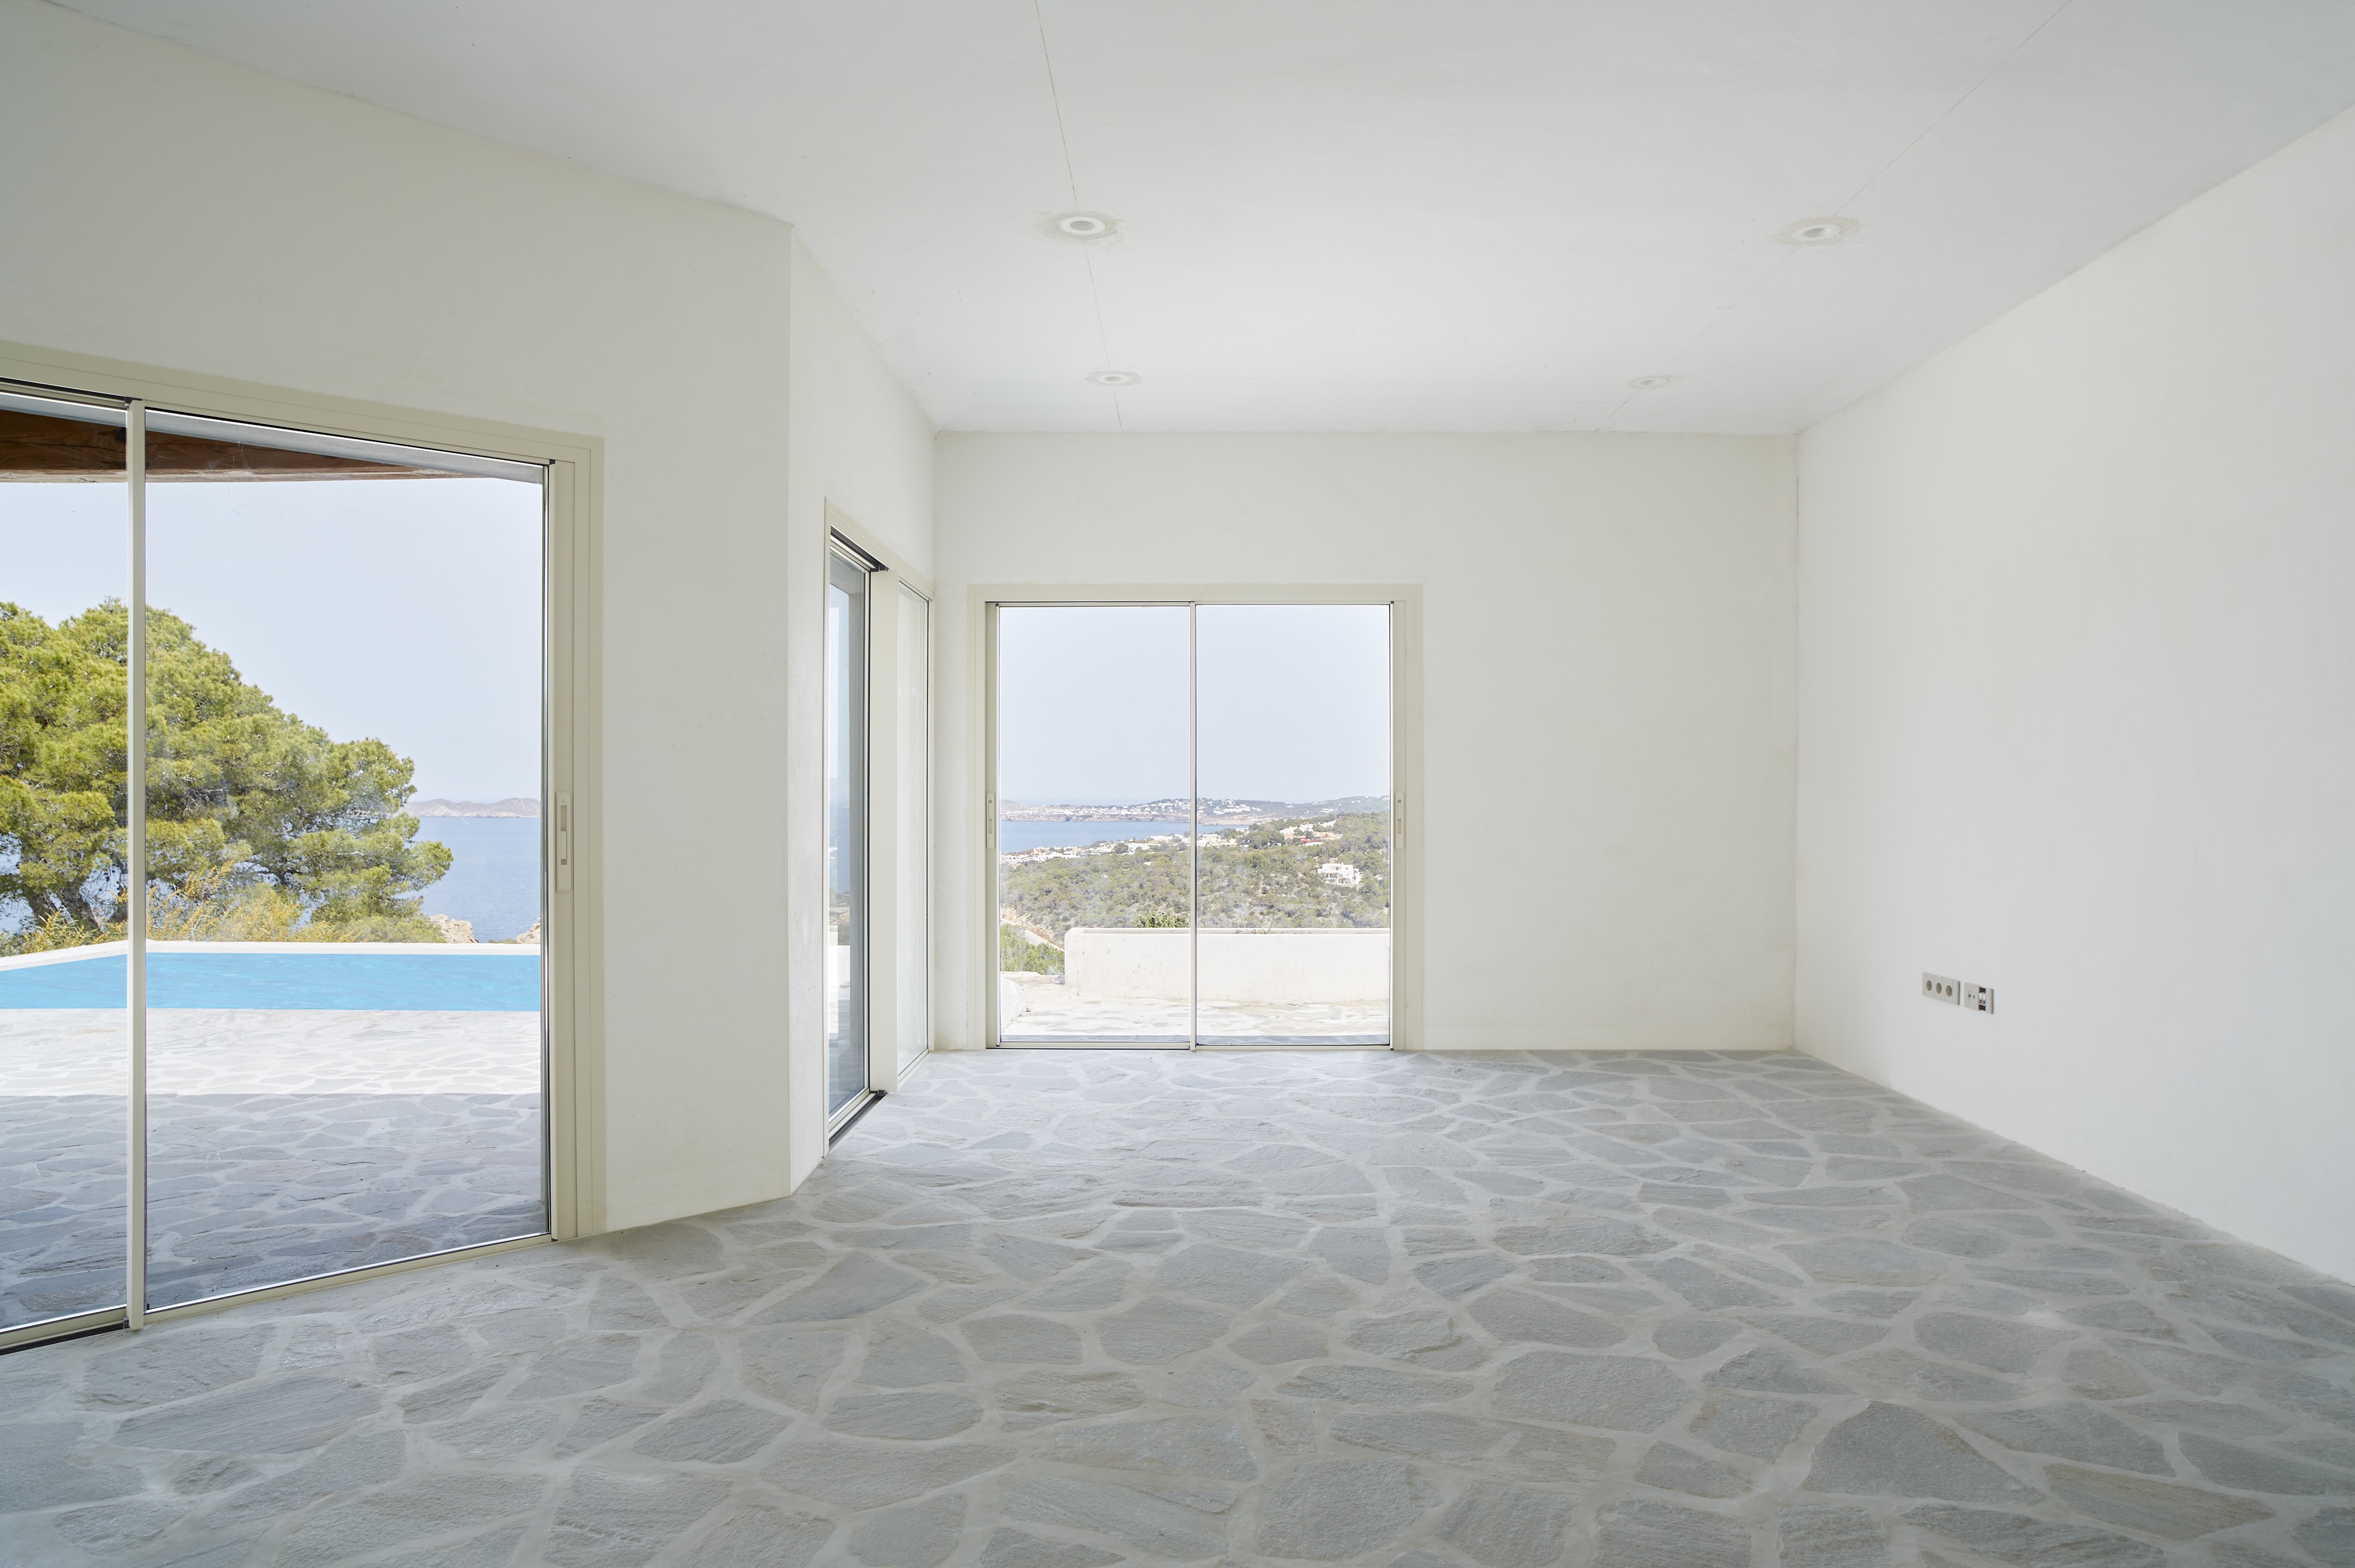 Brand new renovated villa with stunning sea views - 3